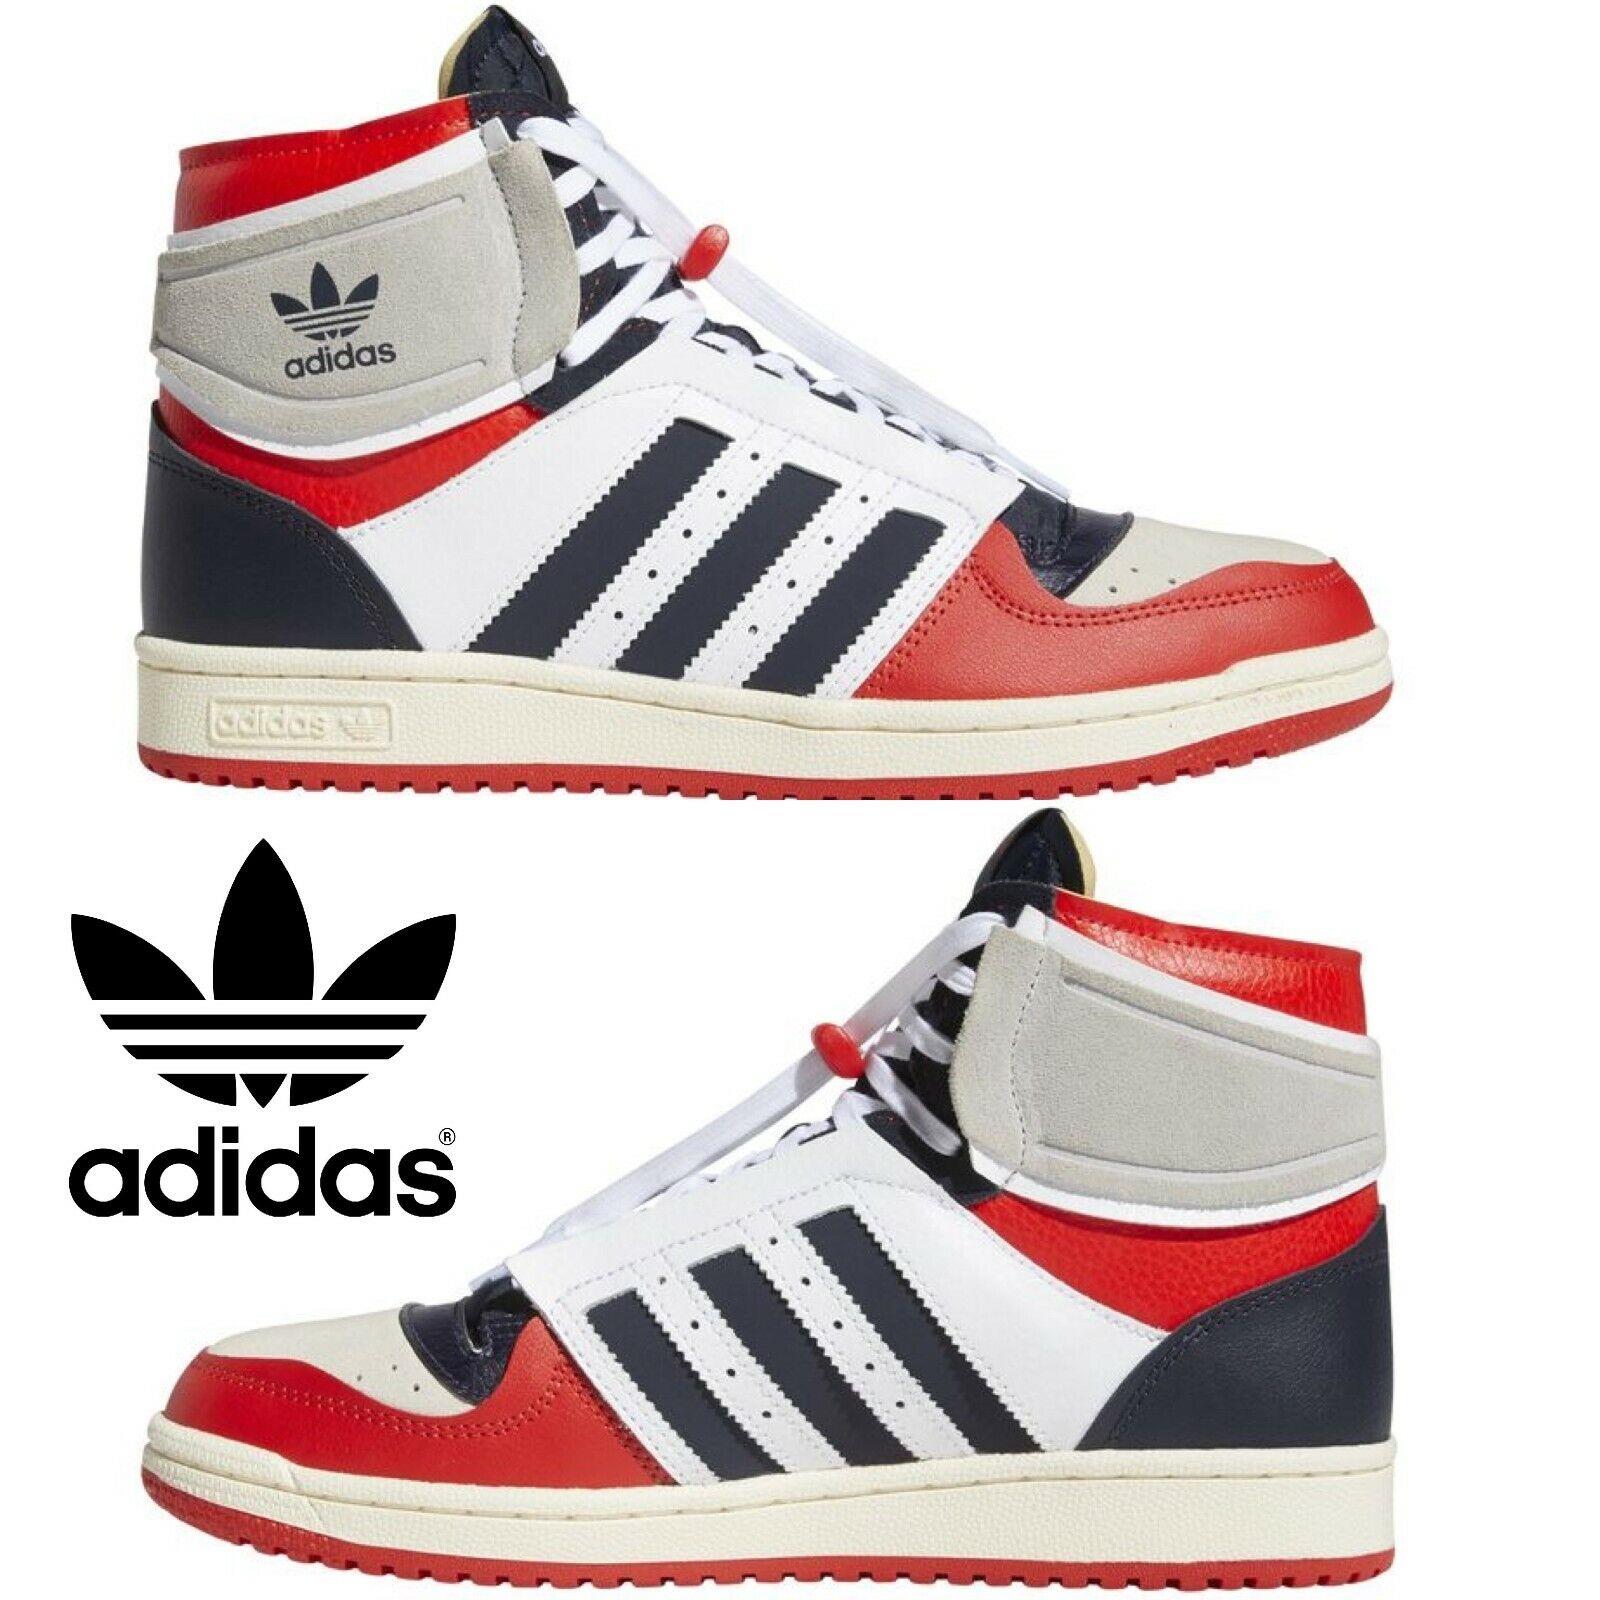 Adidas Originals Top Ten Mid Men`s Sneakers Comfort Sport Casual Shoes White Red